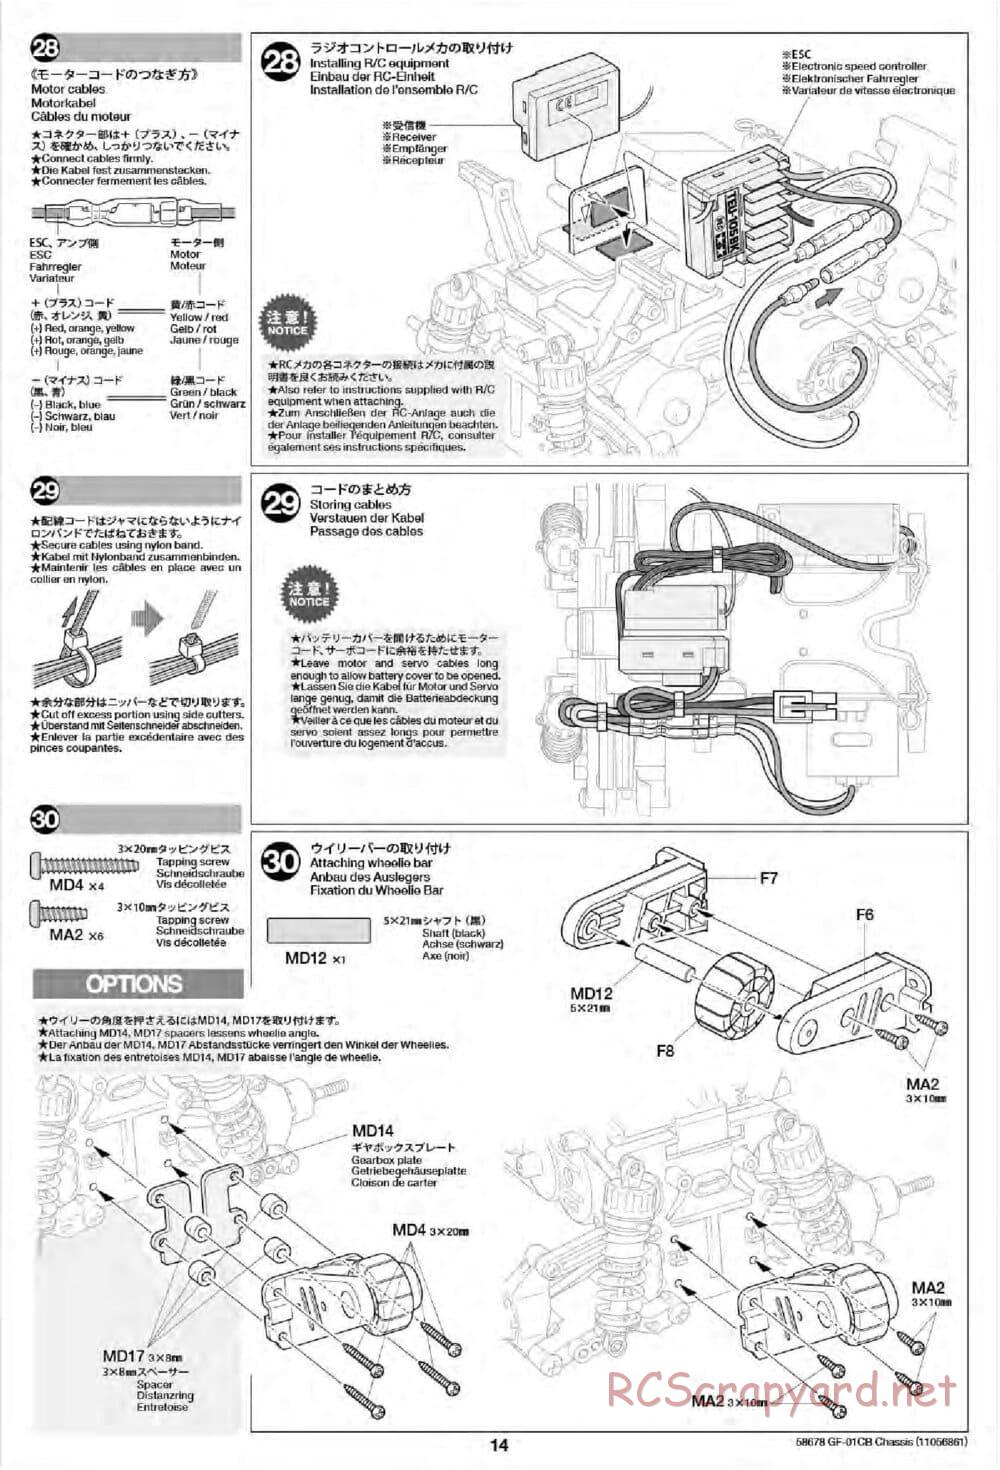 Tamiya - Comical Avante - GF-01CB Chassis - Manual - Page 16